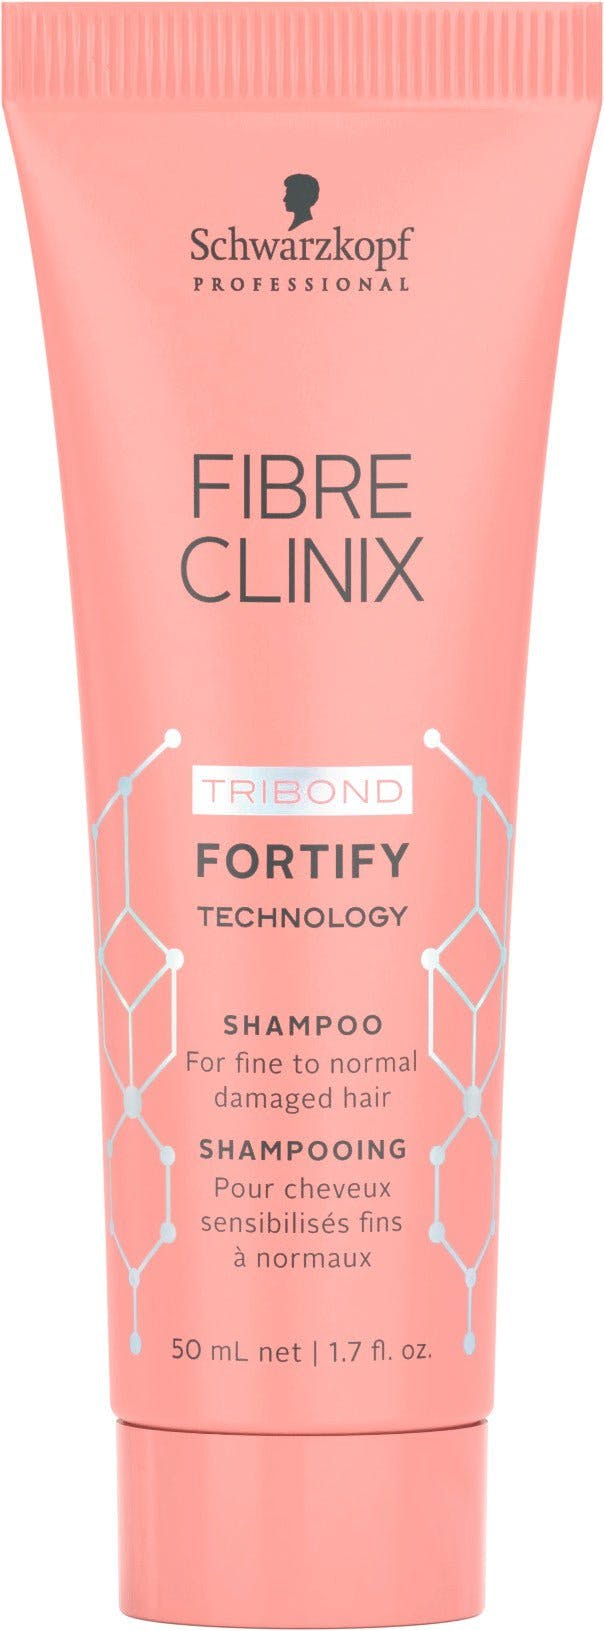 Schwarzkopf Fibre Clinix Fortify Shampoo 50ml